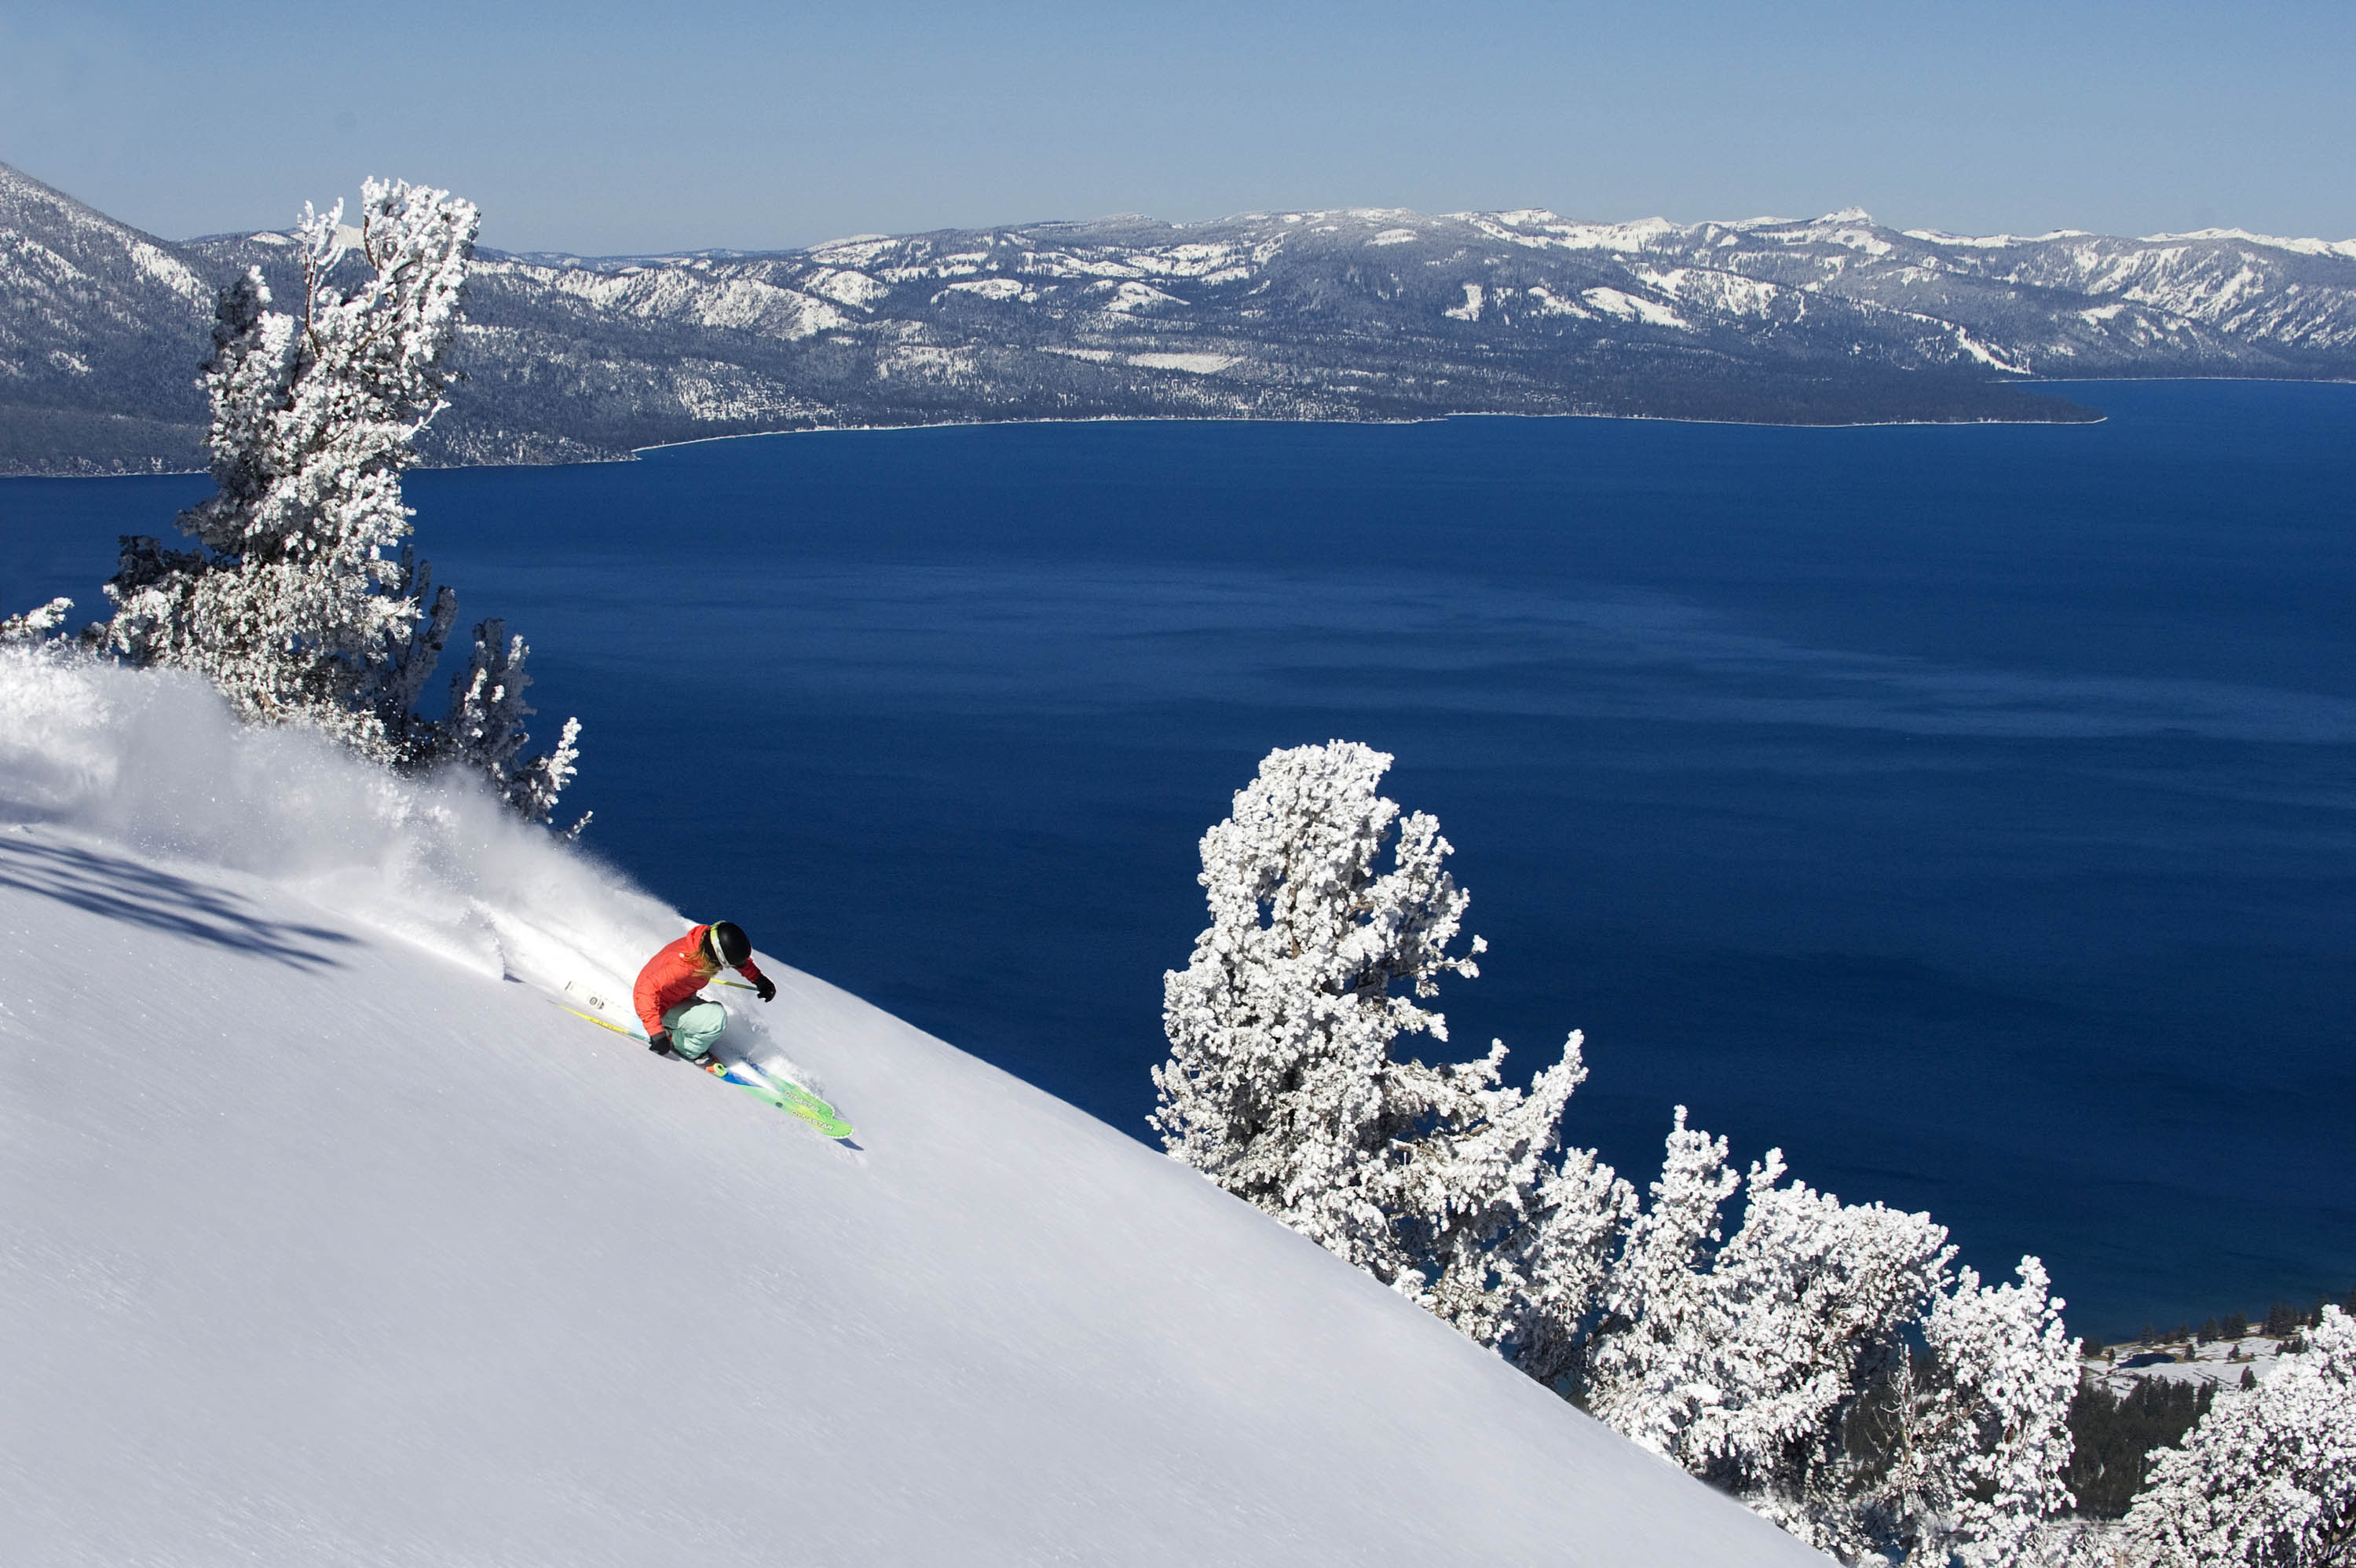 Deep powder skiing at Heavenly Mountain Resort in South Lake Tahoe, California.